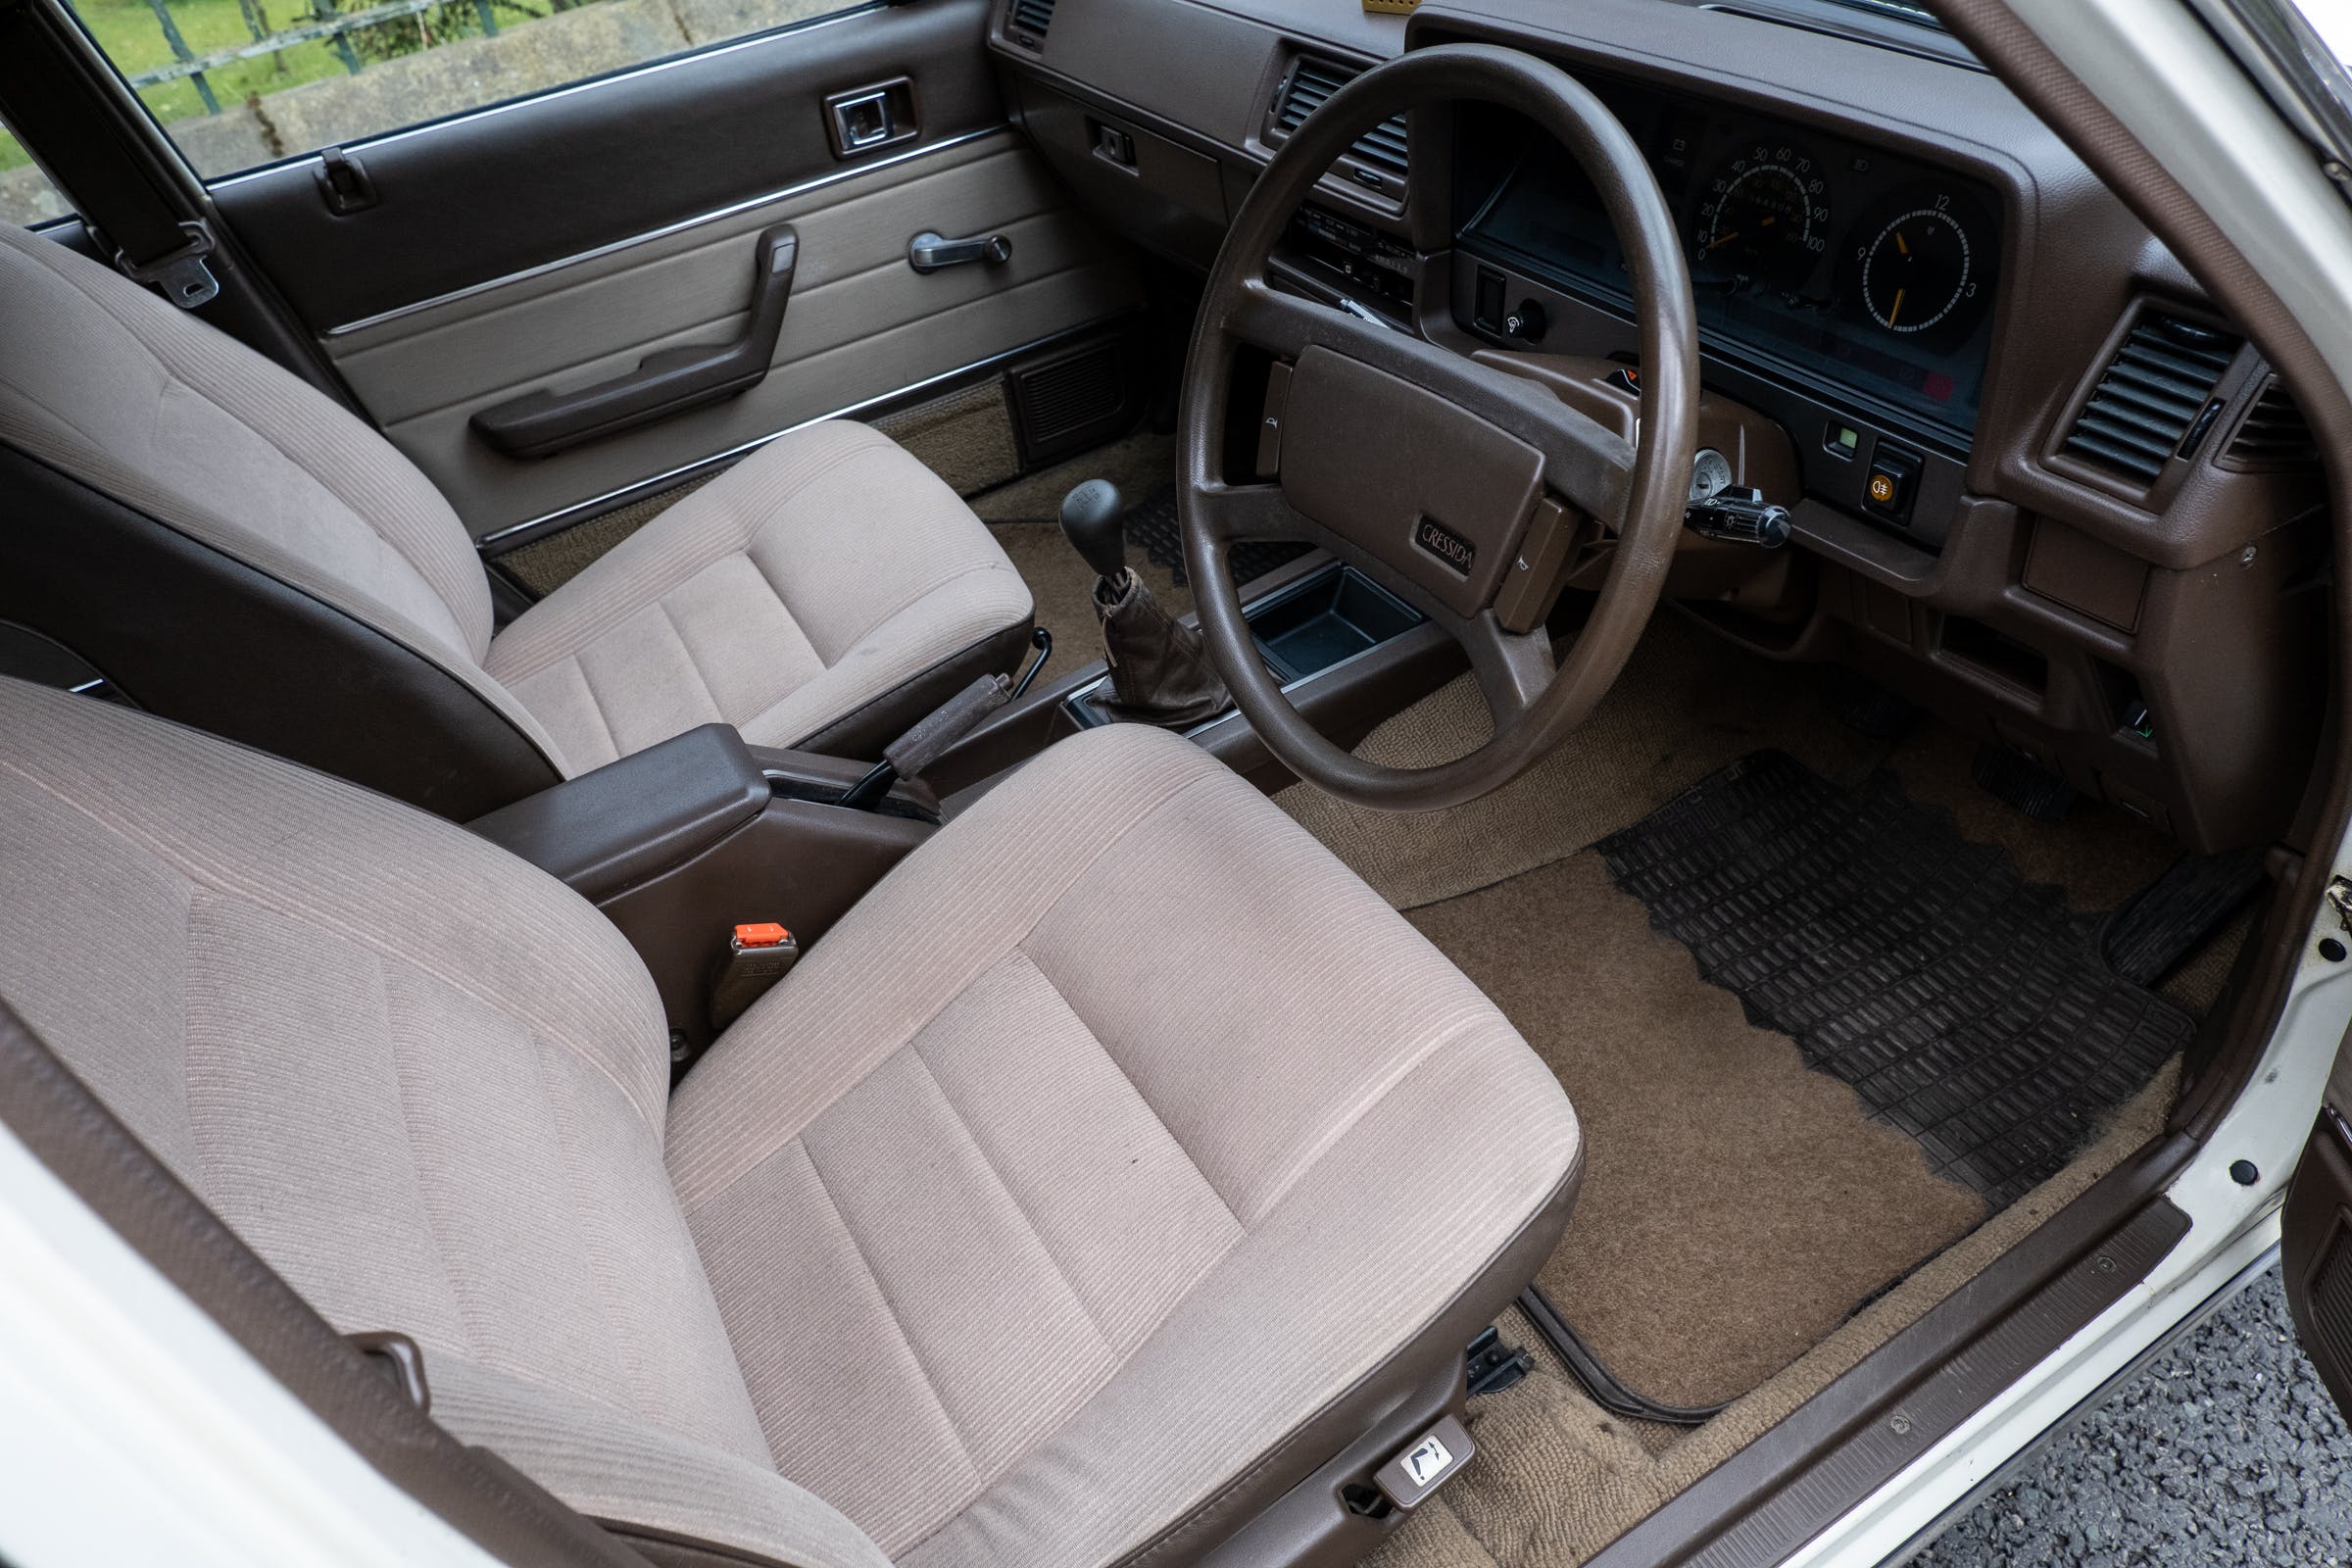 1982 Toyota Cressida DX interior